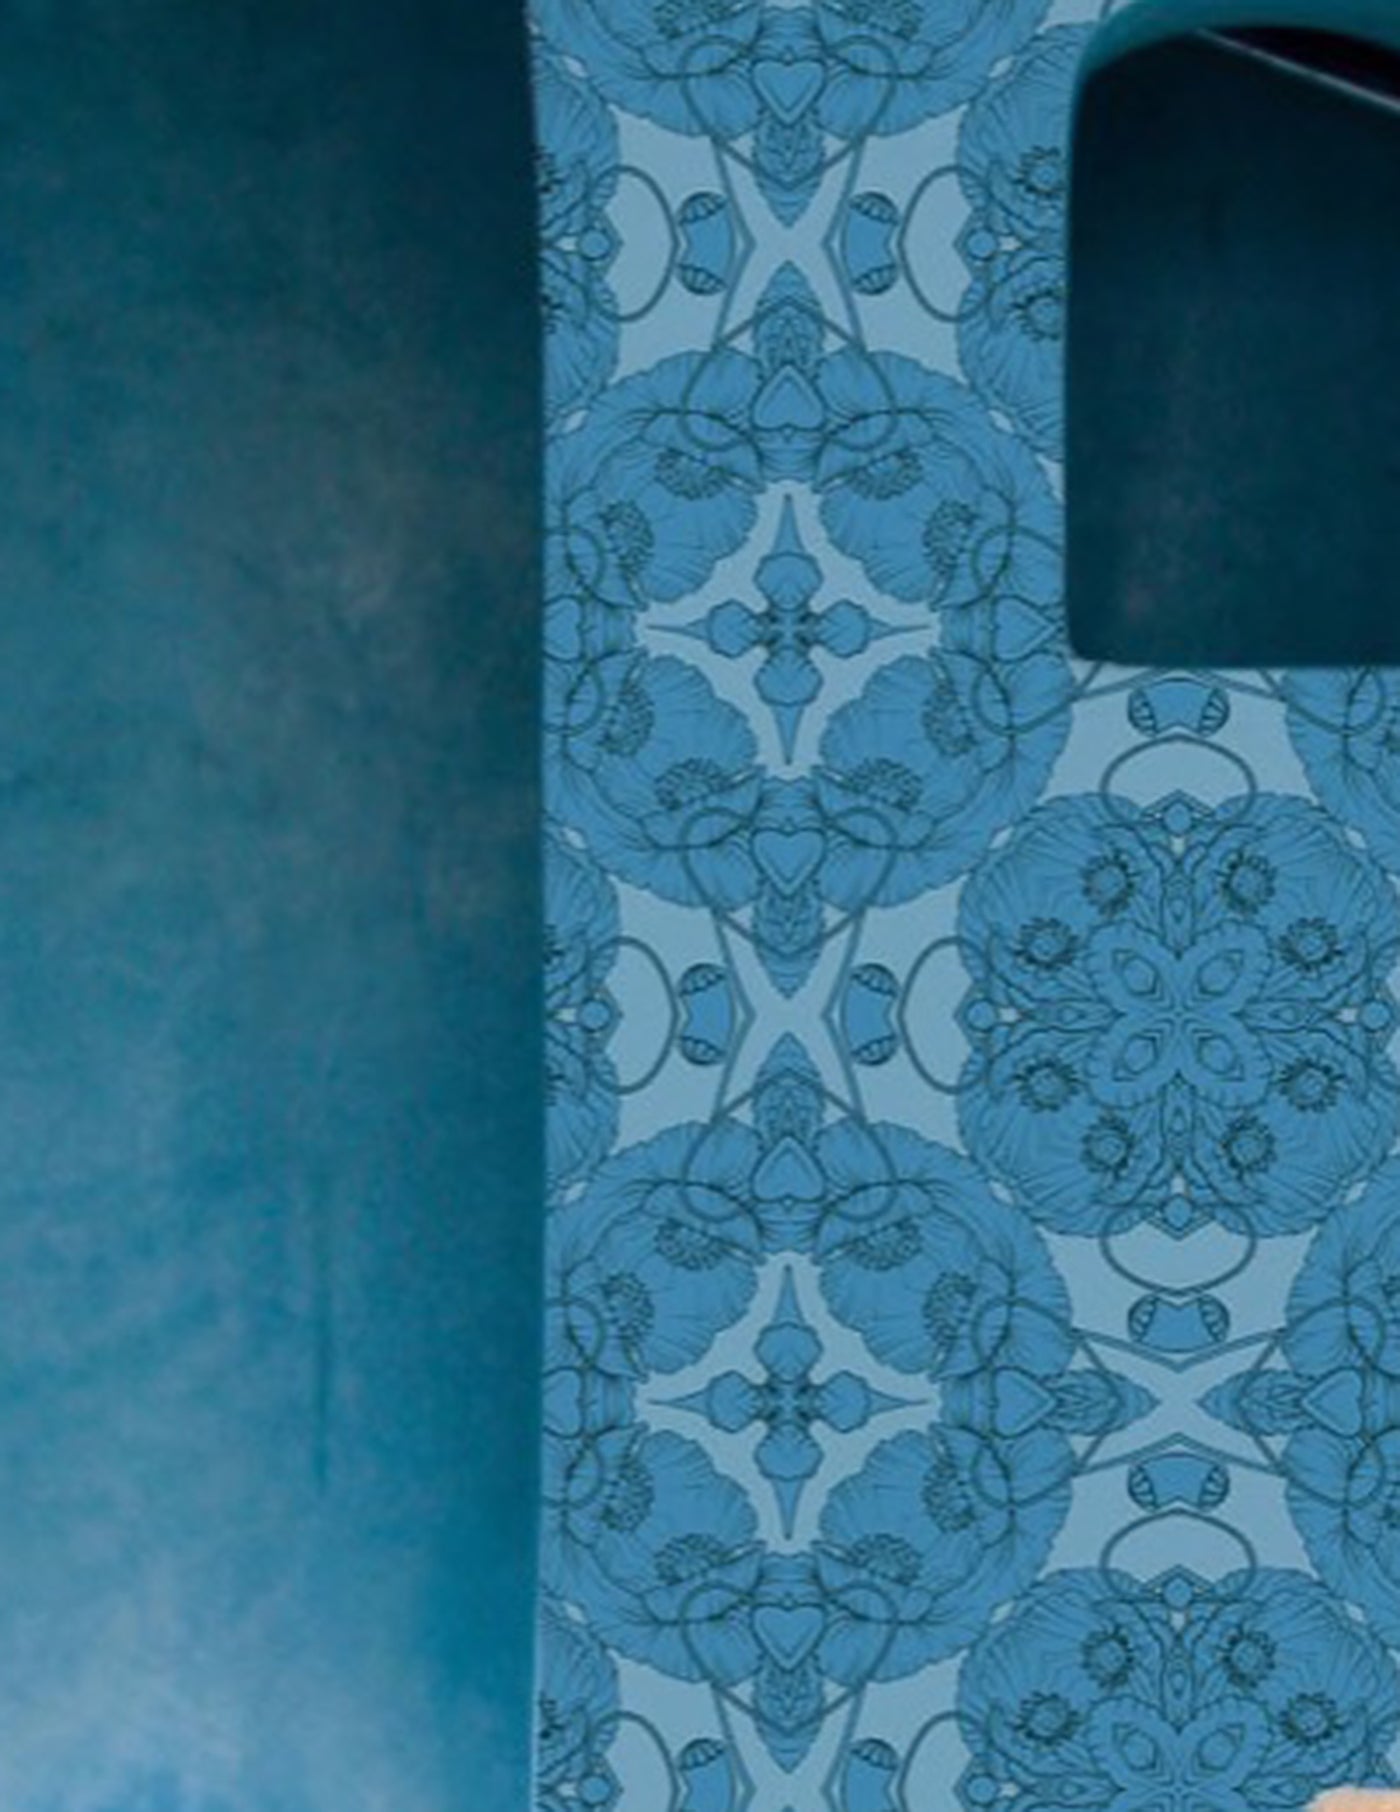 Sapphire Blue Floral Wallpaper